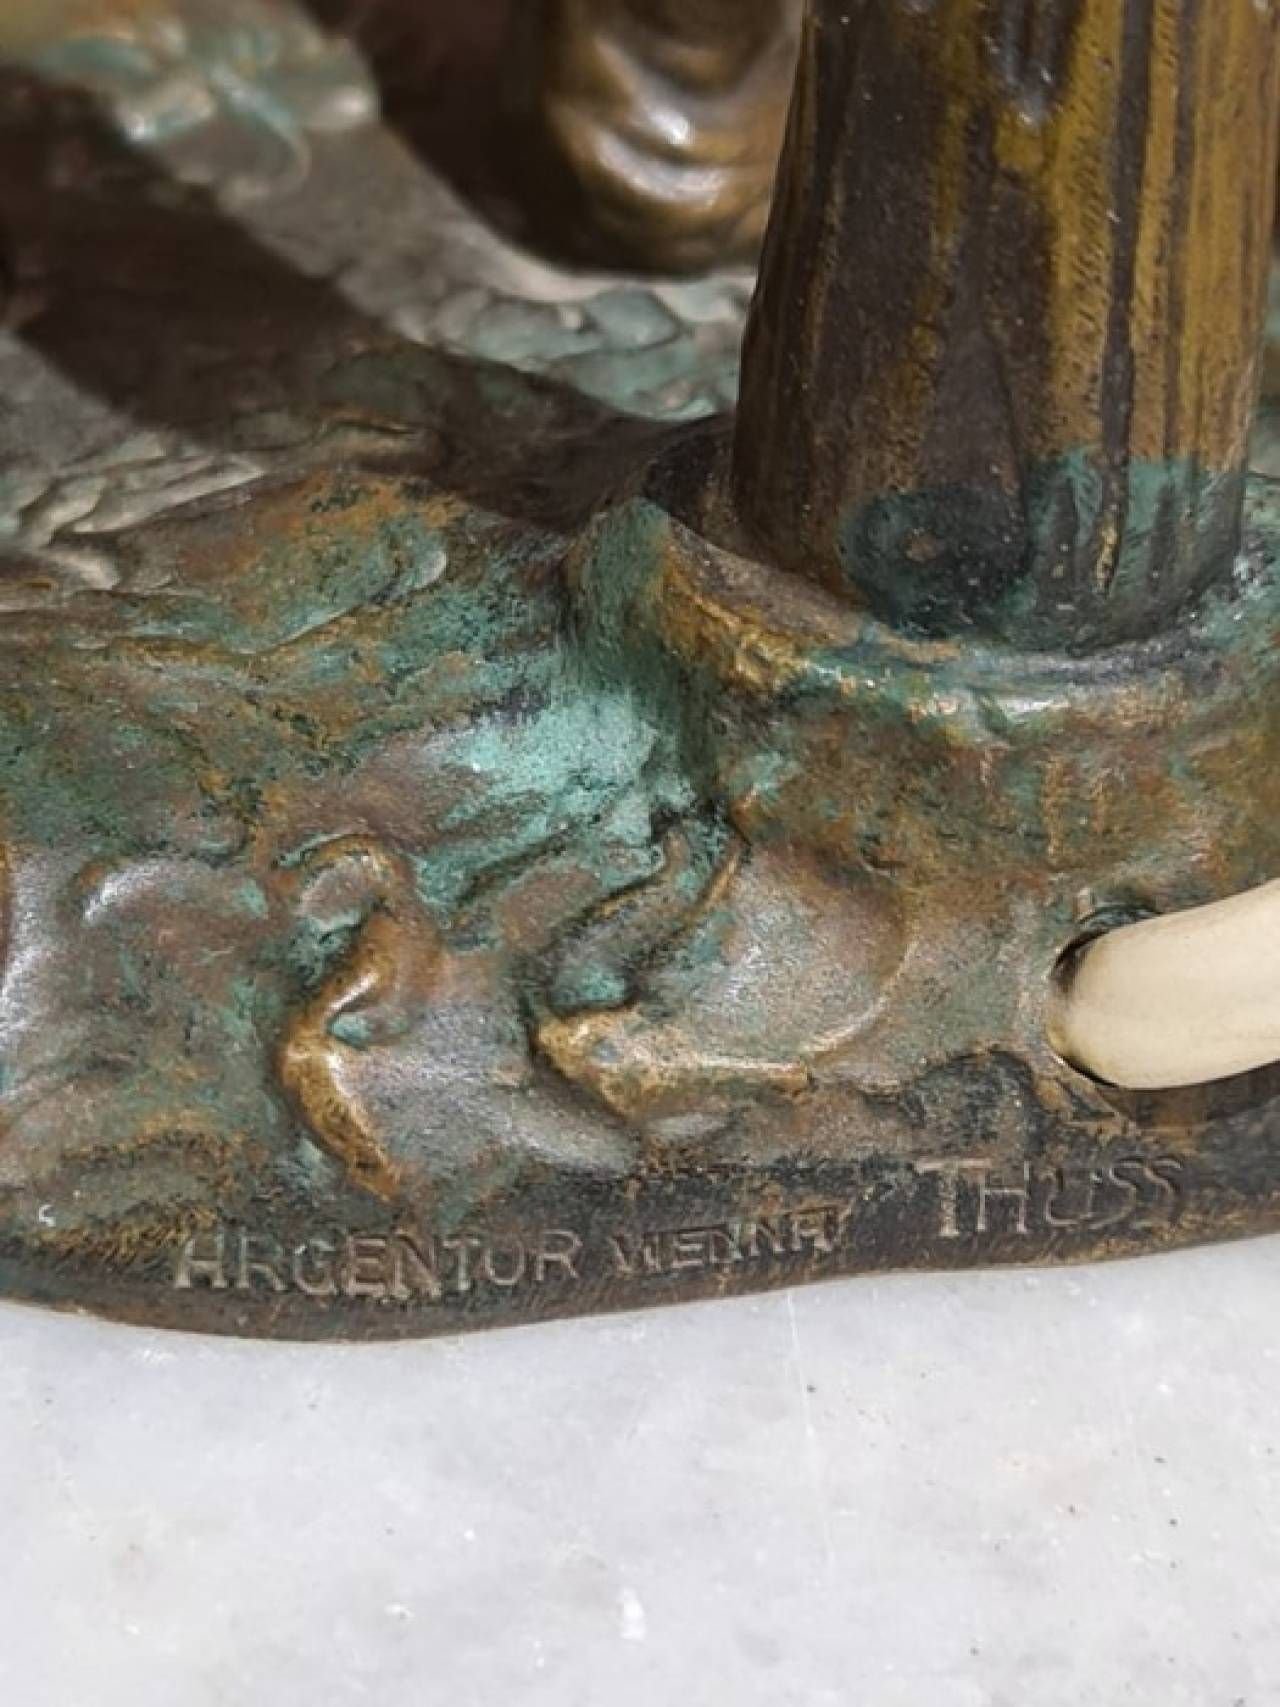 Lampa de masa din bronz patinat in 3 culori, ARGENTOR VINENNA, semnata